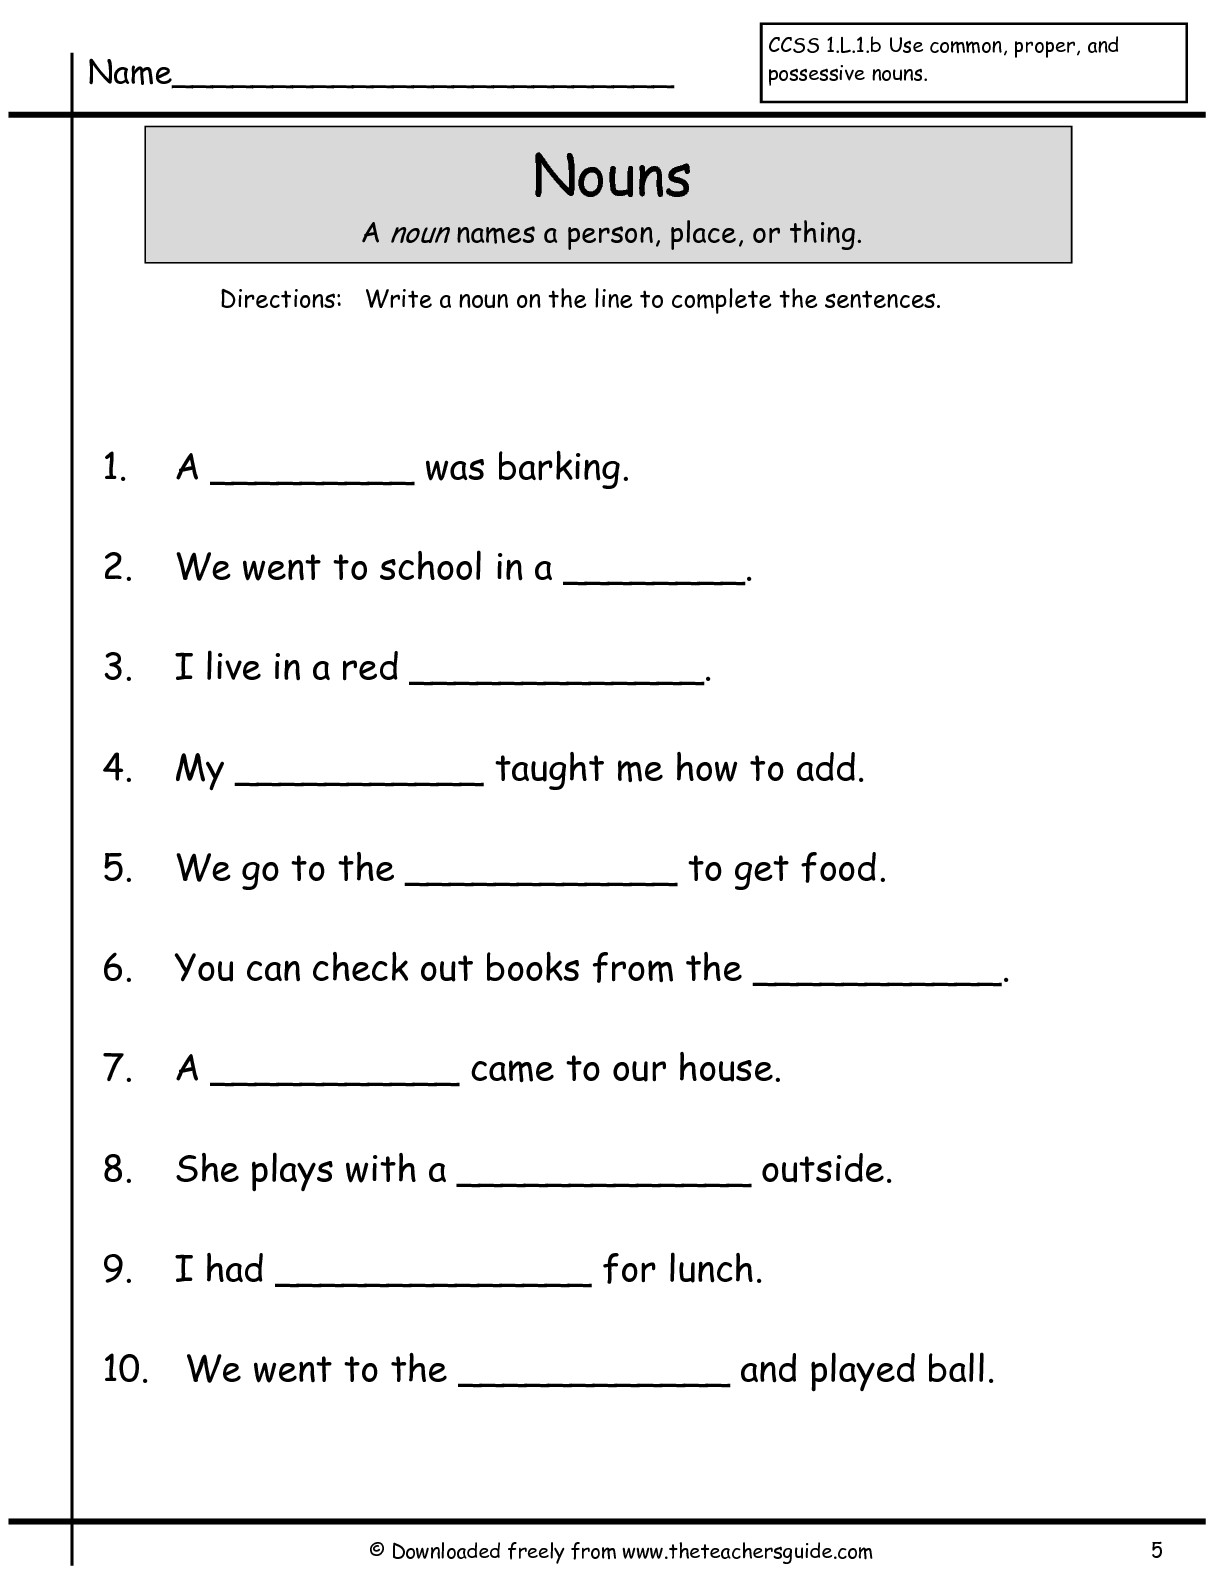 13 Images of Worksheets For 1st Graders